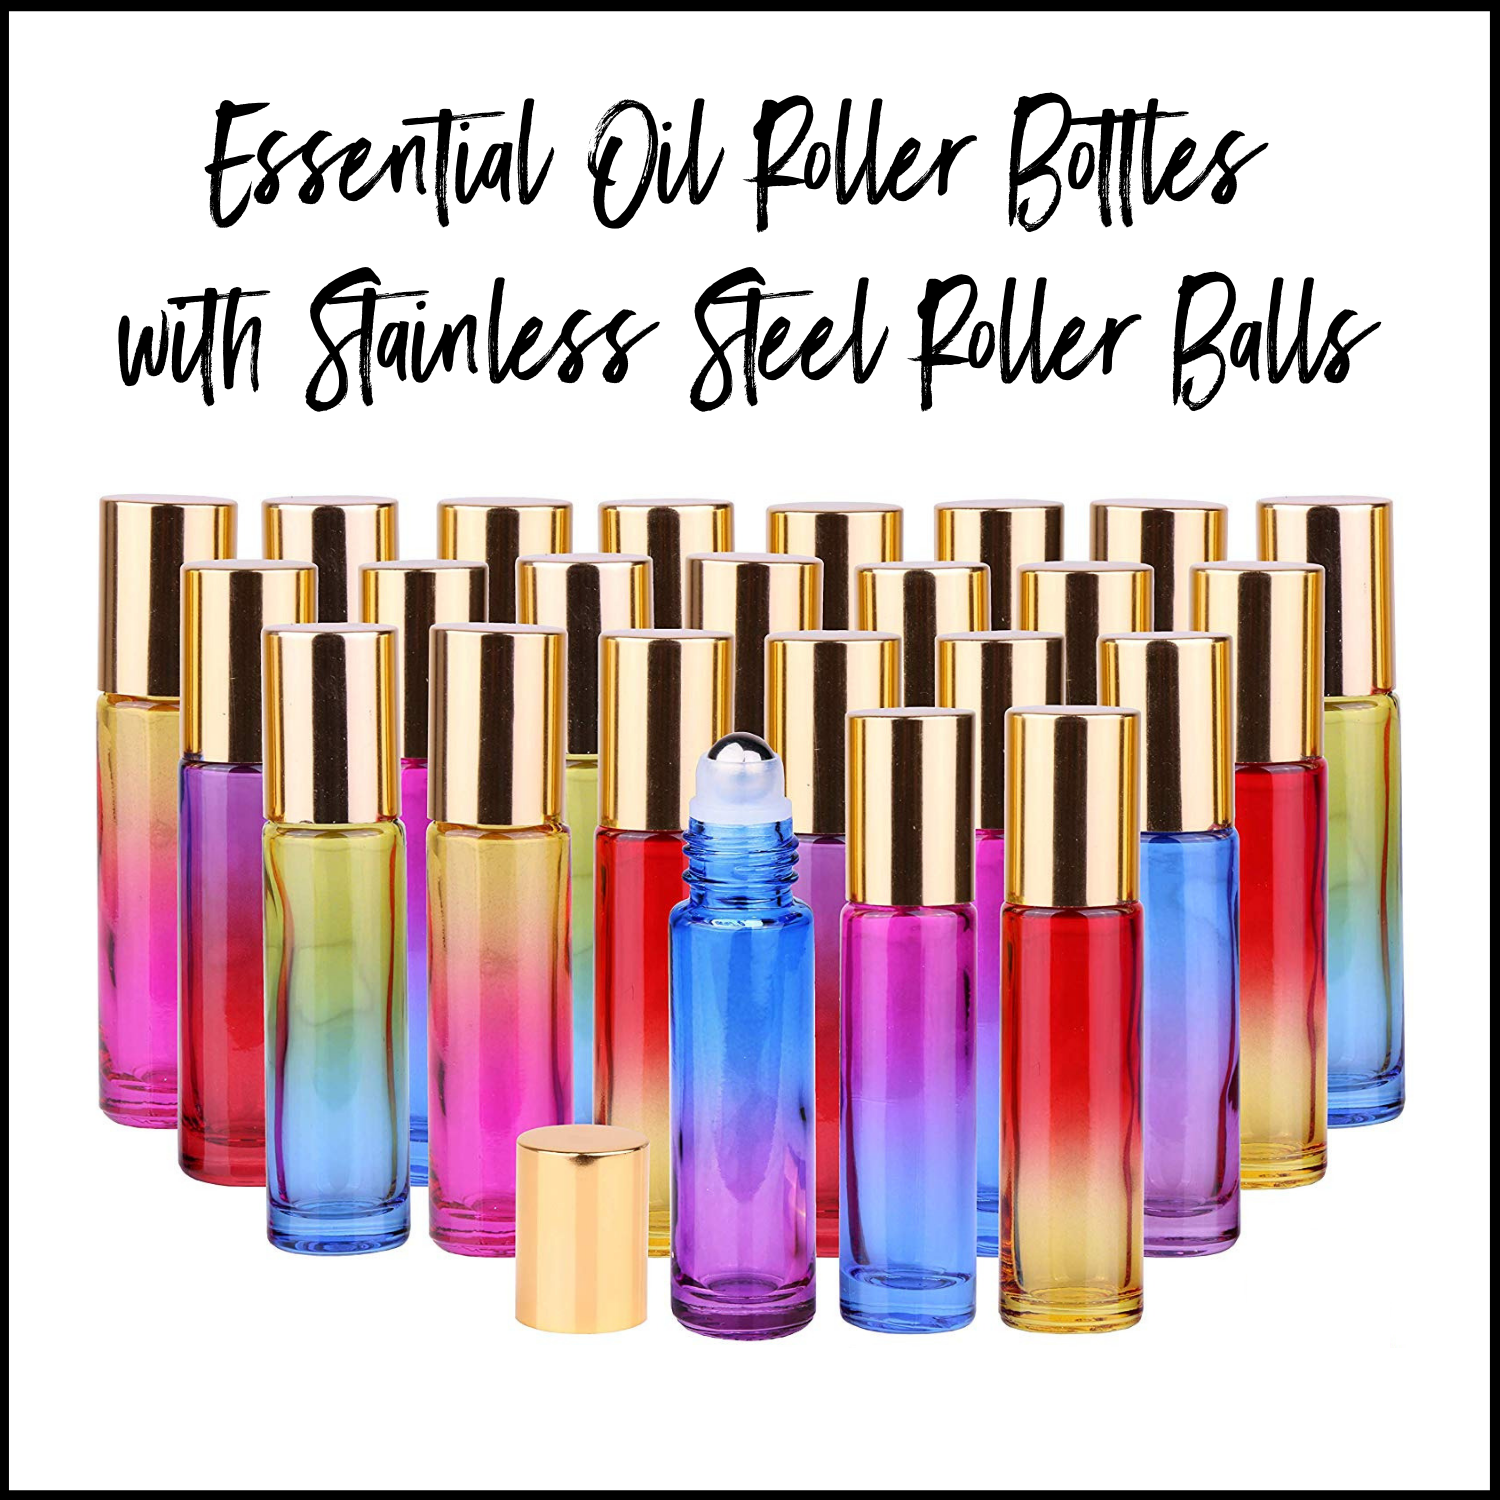 Glass Roller Bottles with Stainless Steel Roller Balls